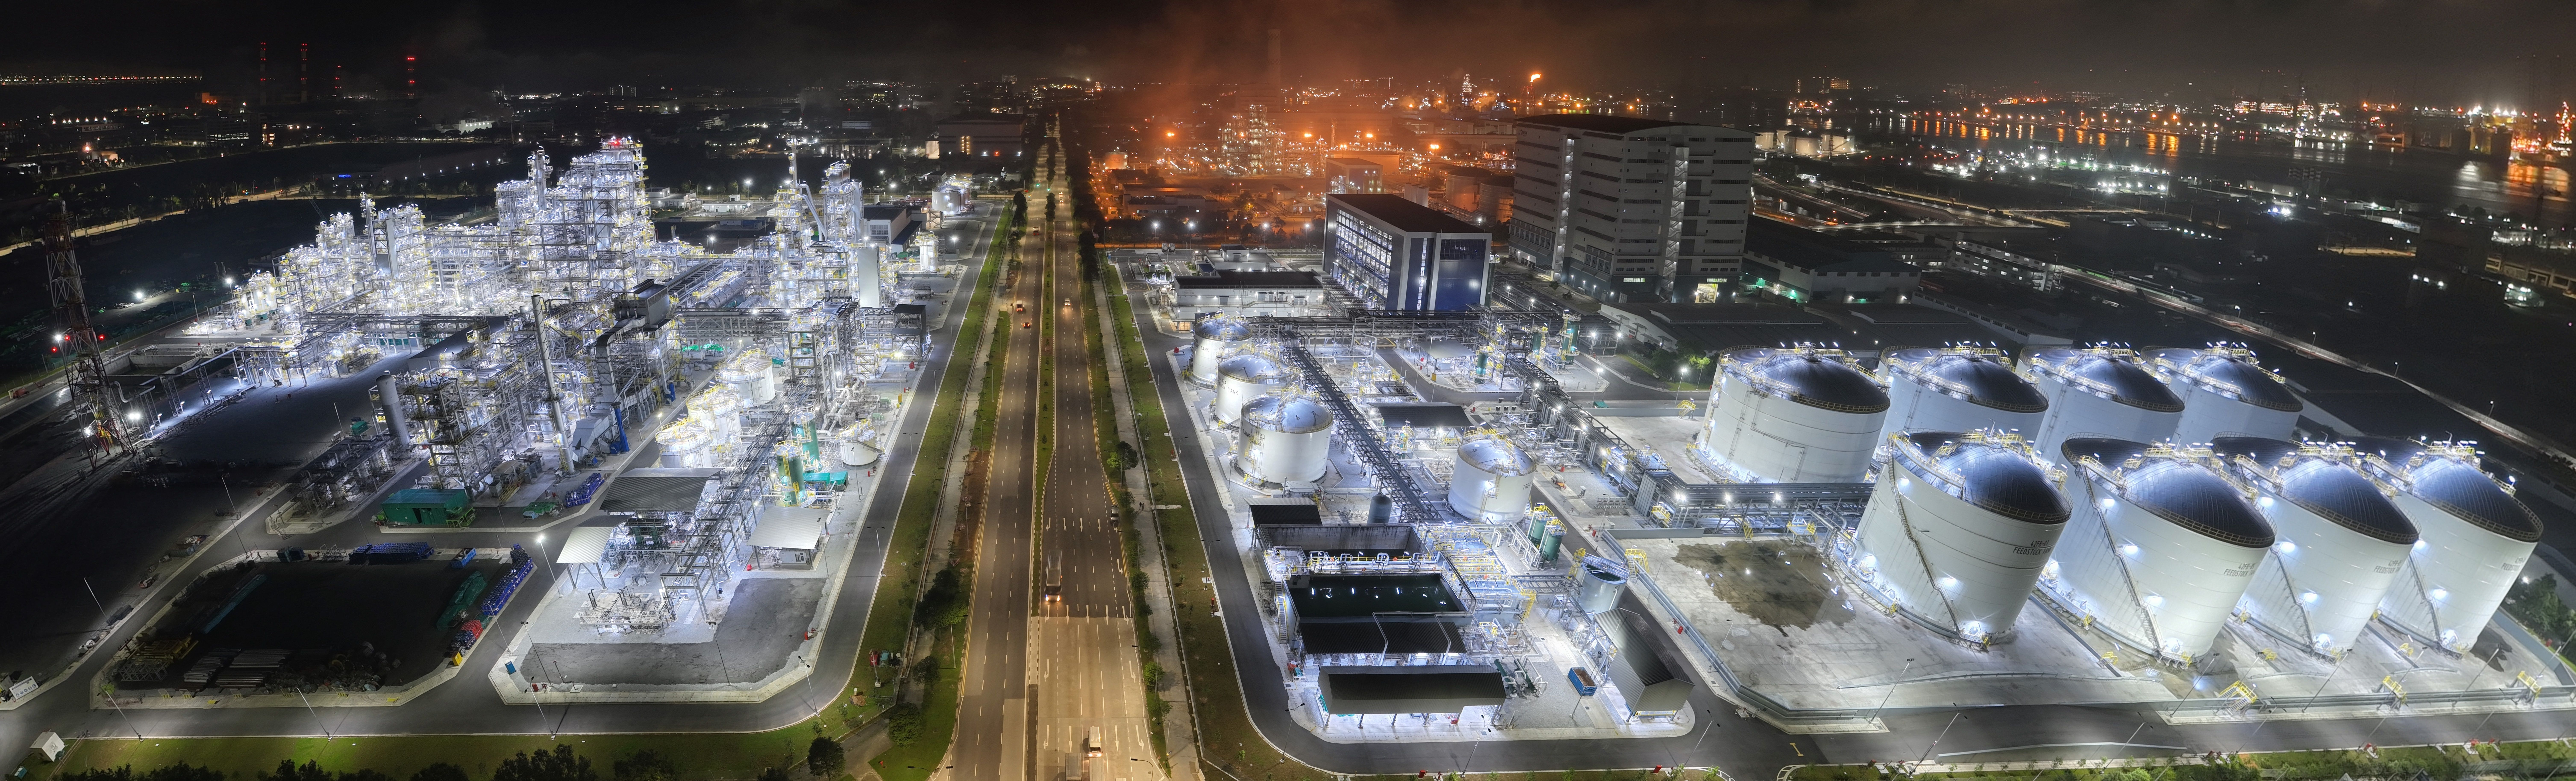 Neste Singapore refinery - 180 degree aerial view